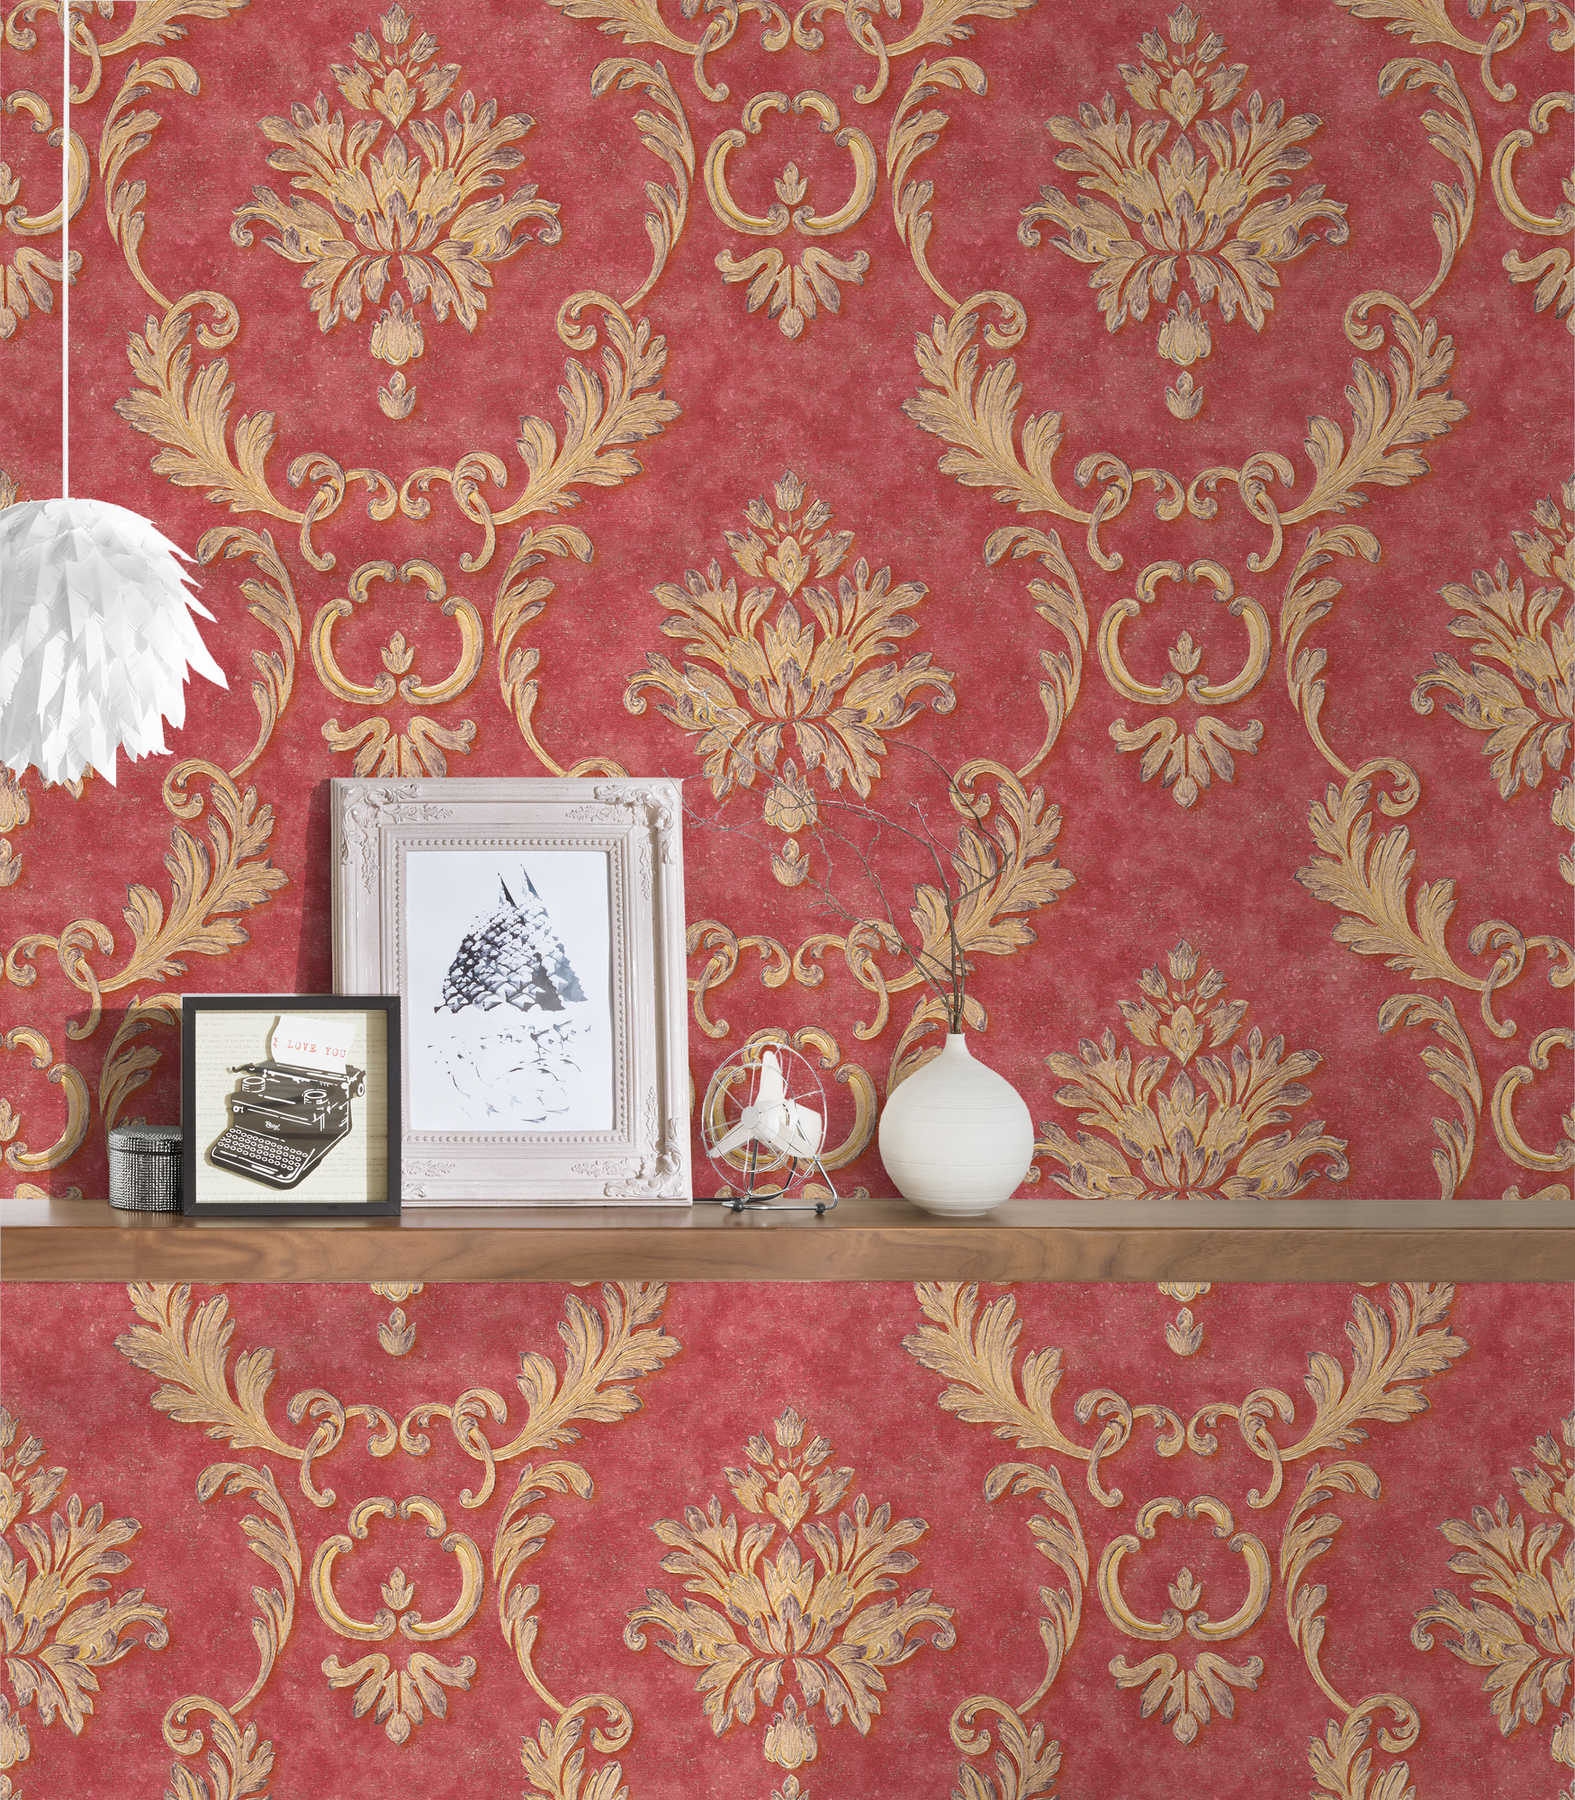             Designer wallpaper floral ornaments & metallic effect - red, gold
        